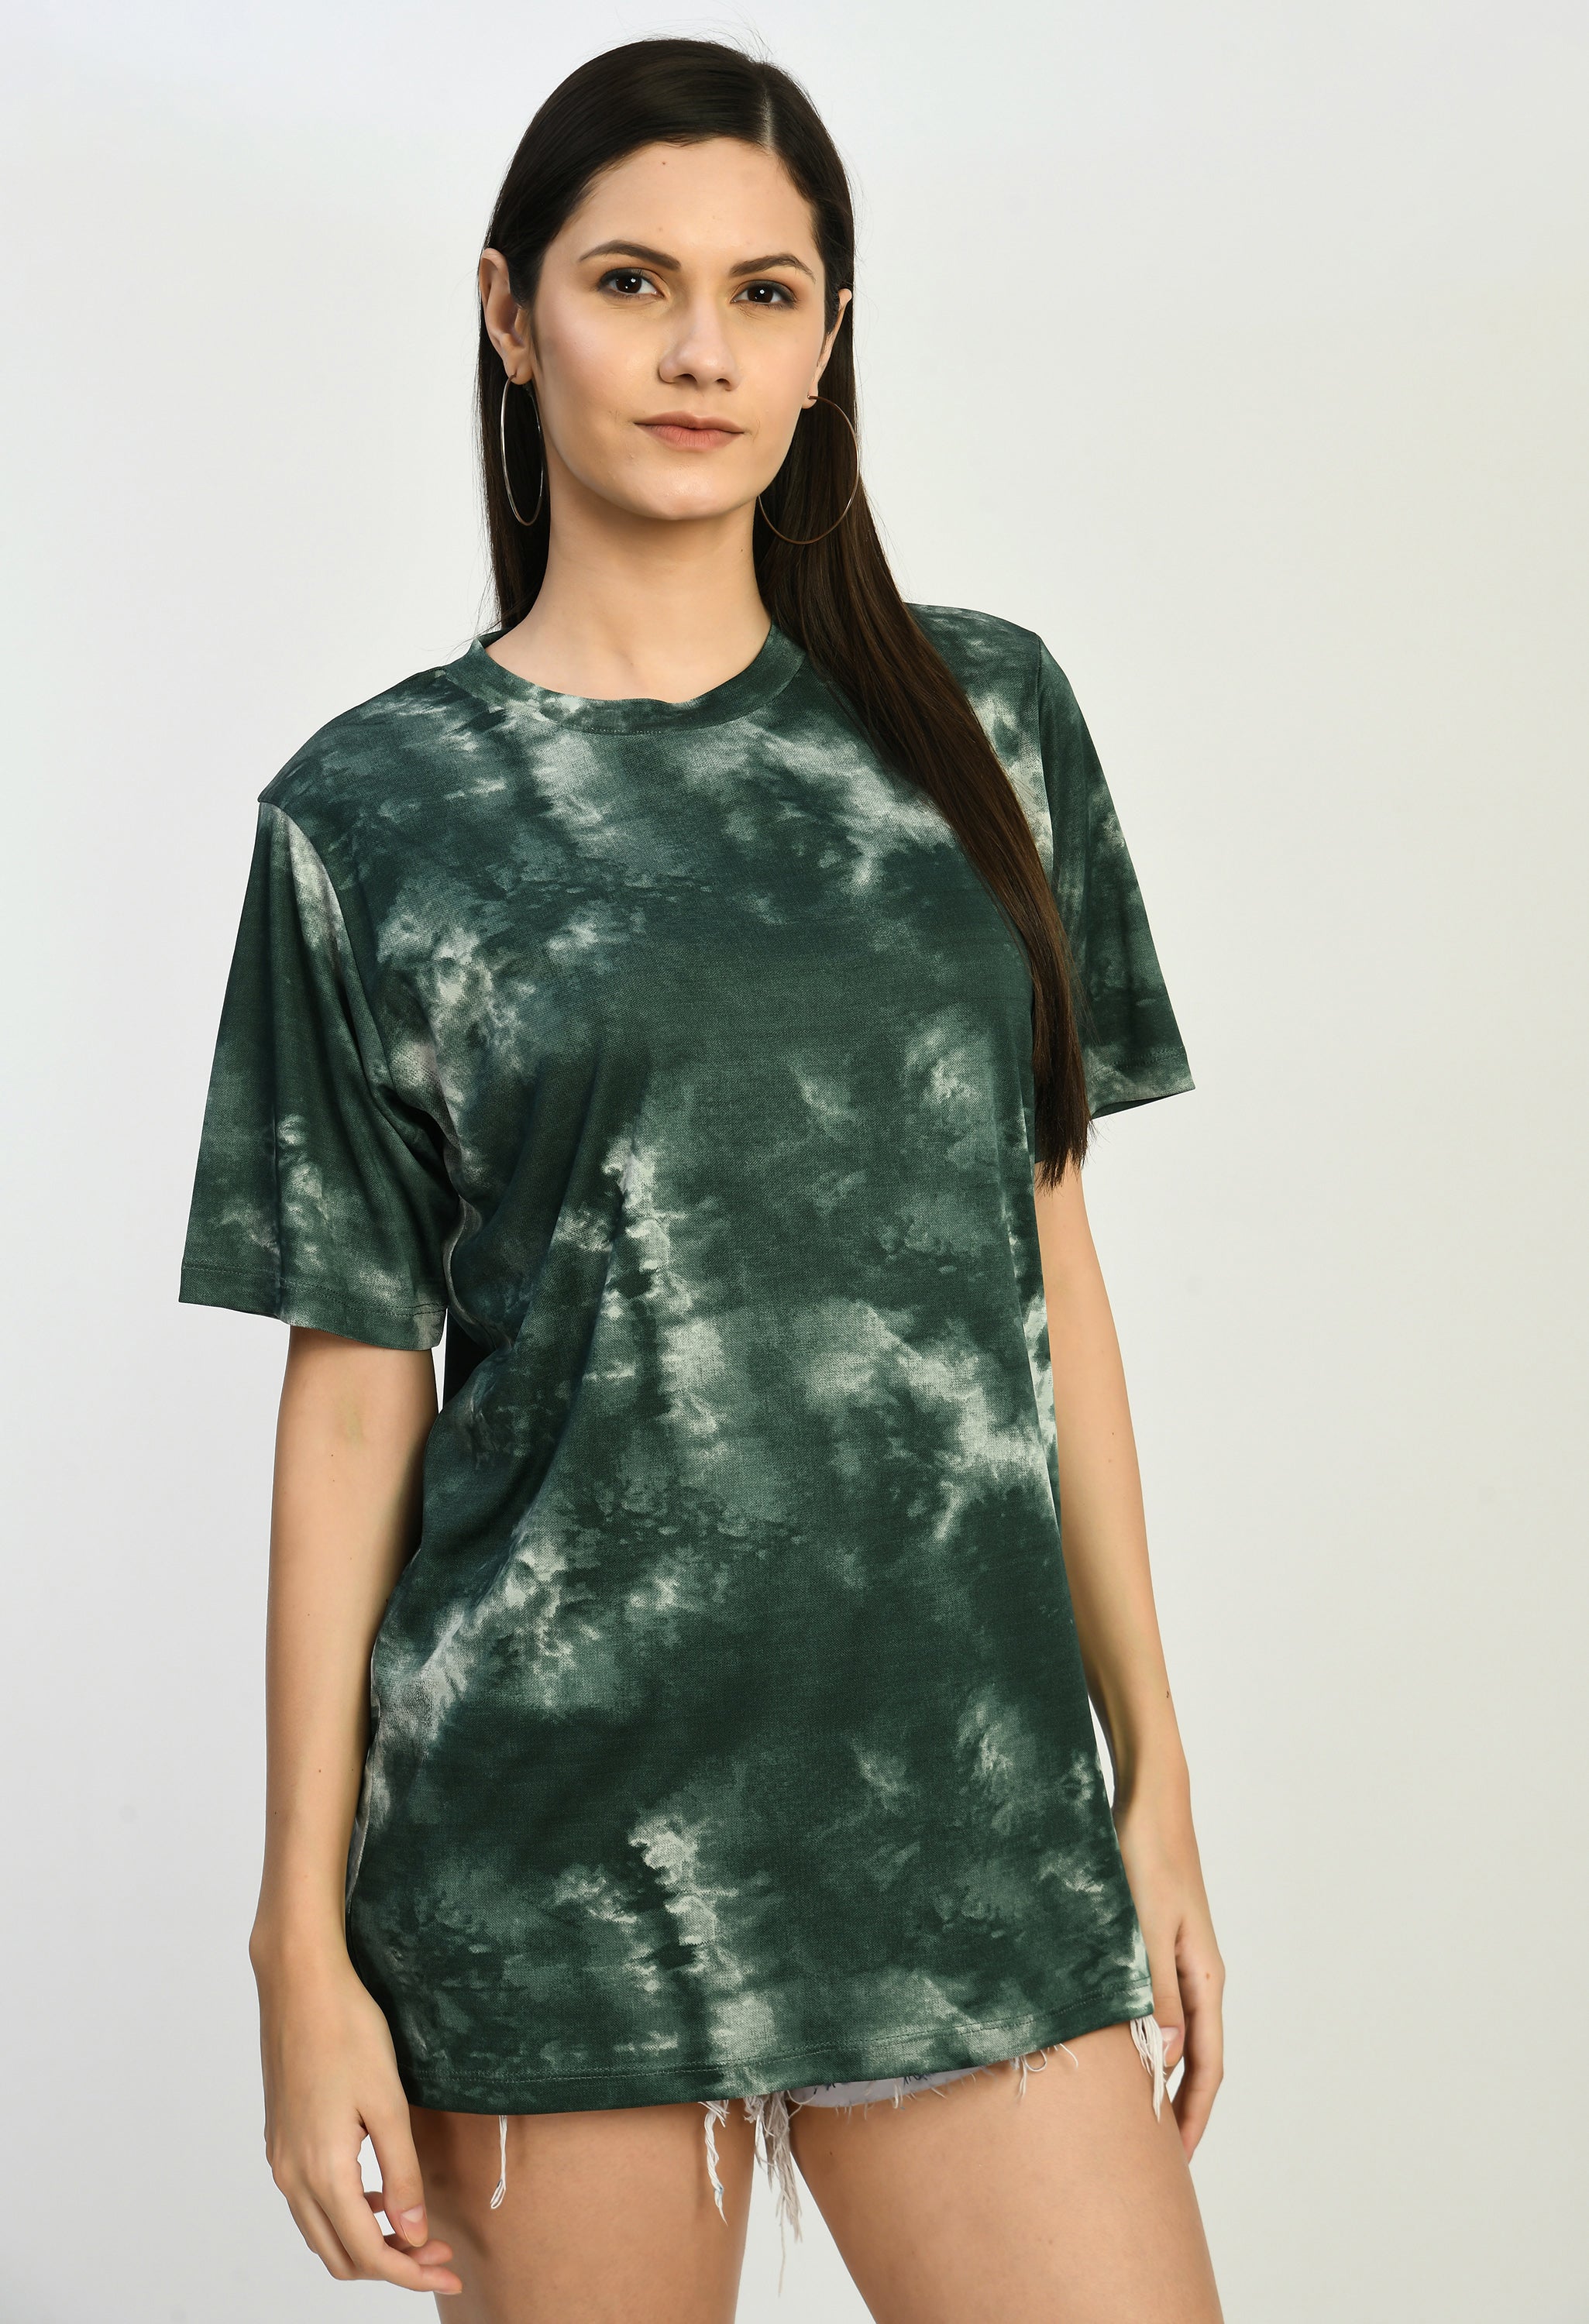 Tie-Dye Print Knitted T-shirt Dress